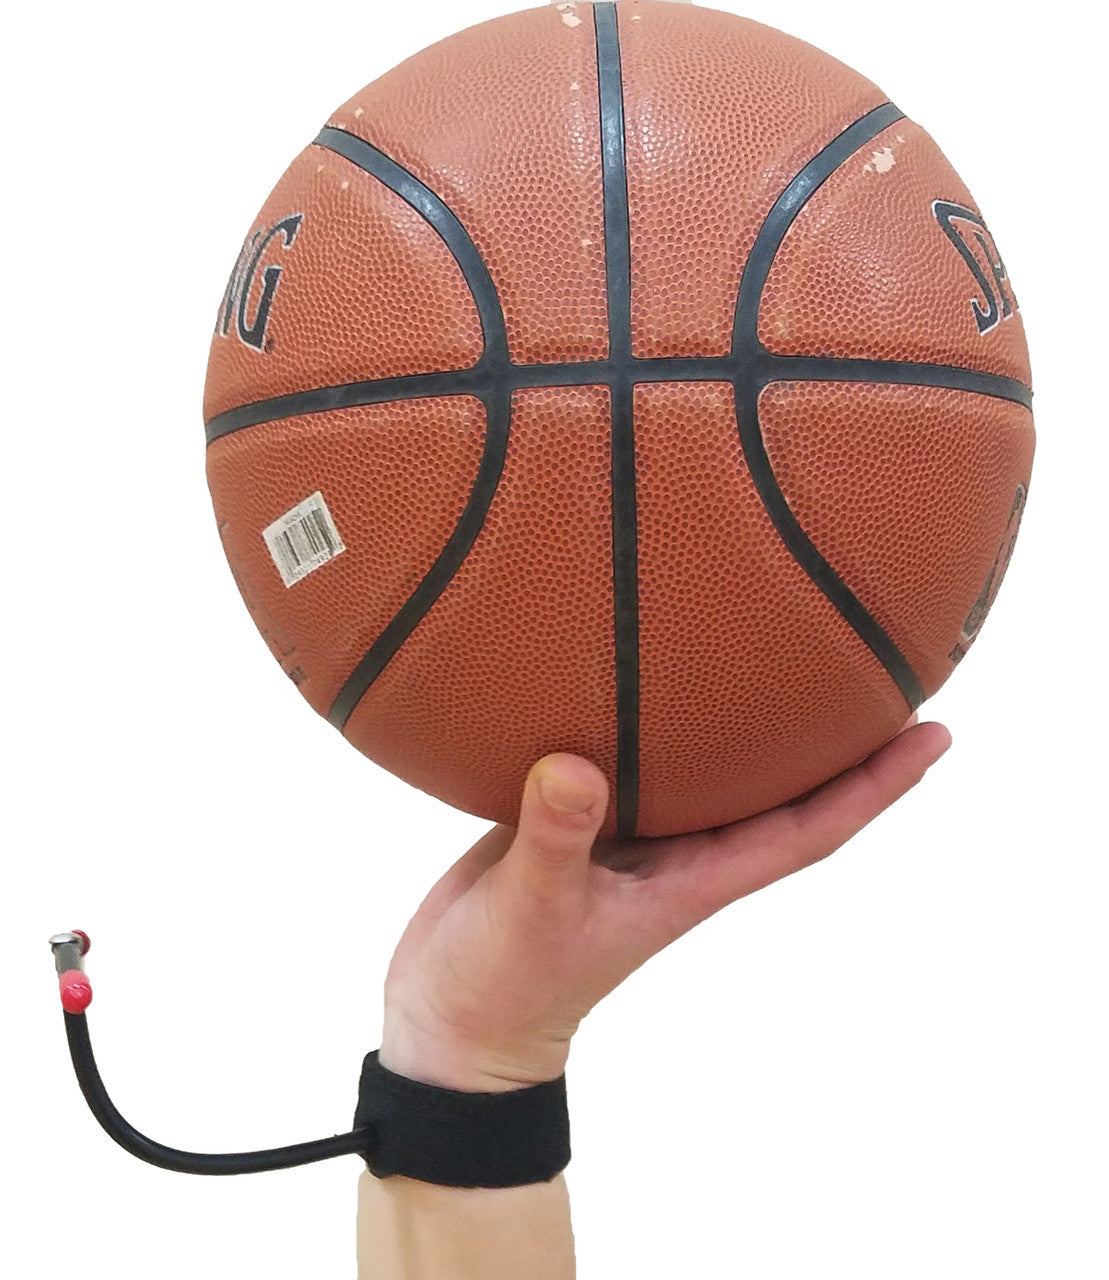 Improve Follow through on shot in basketball